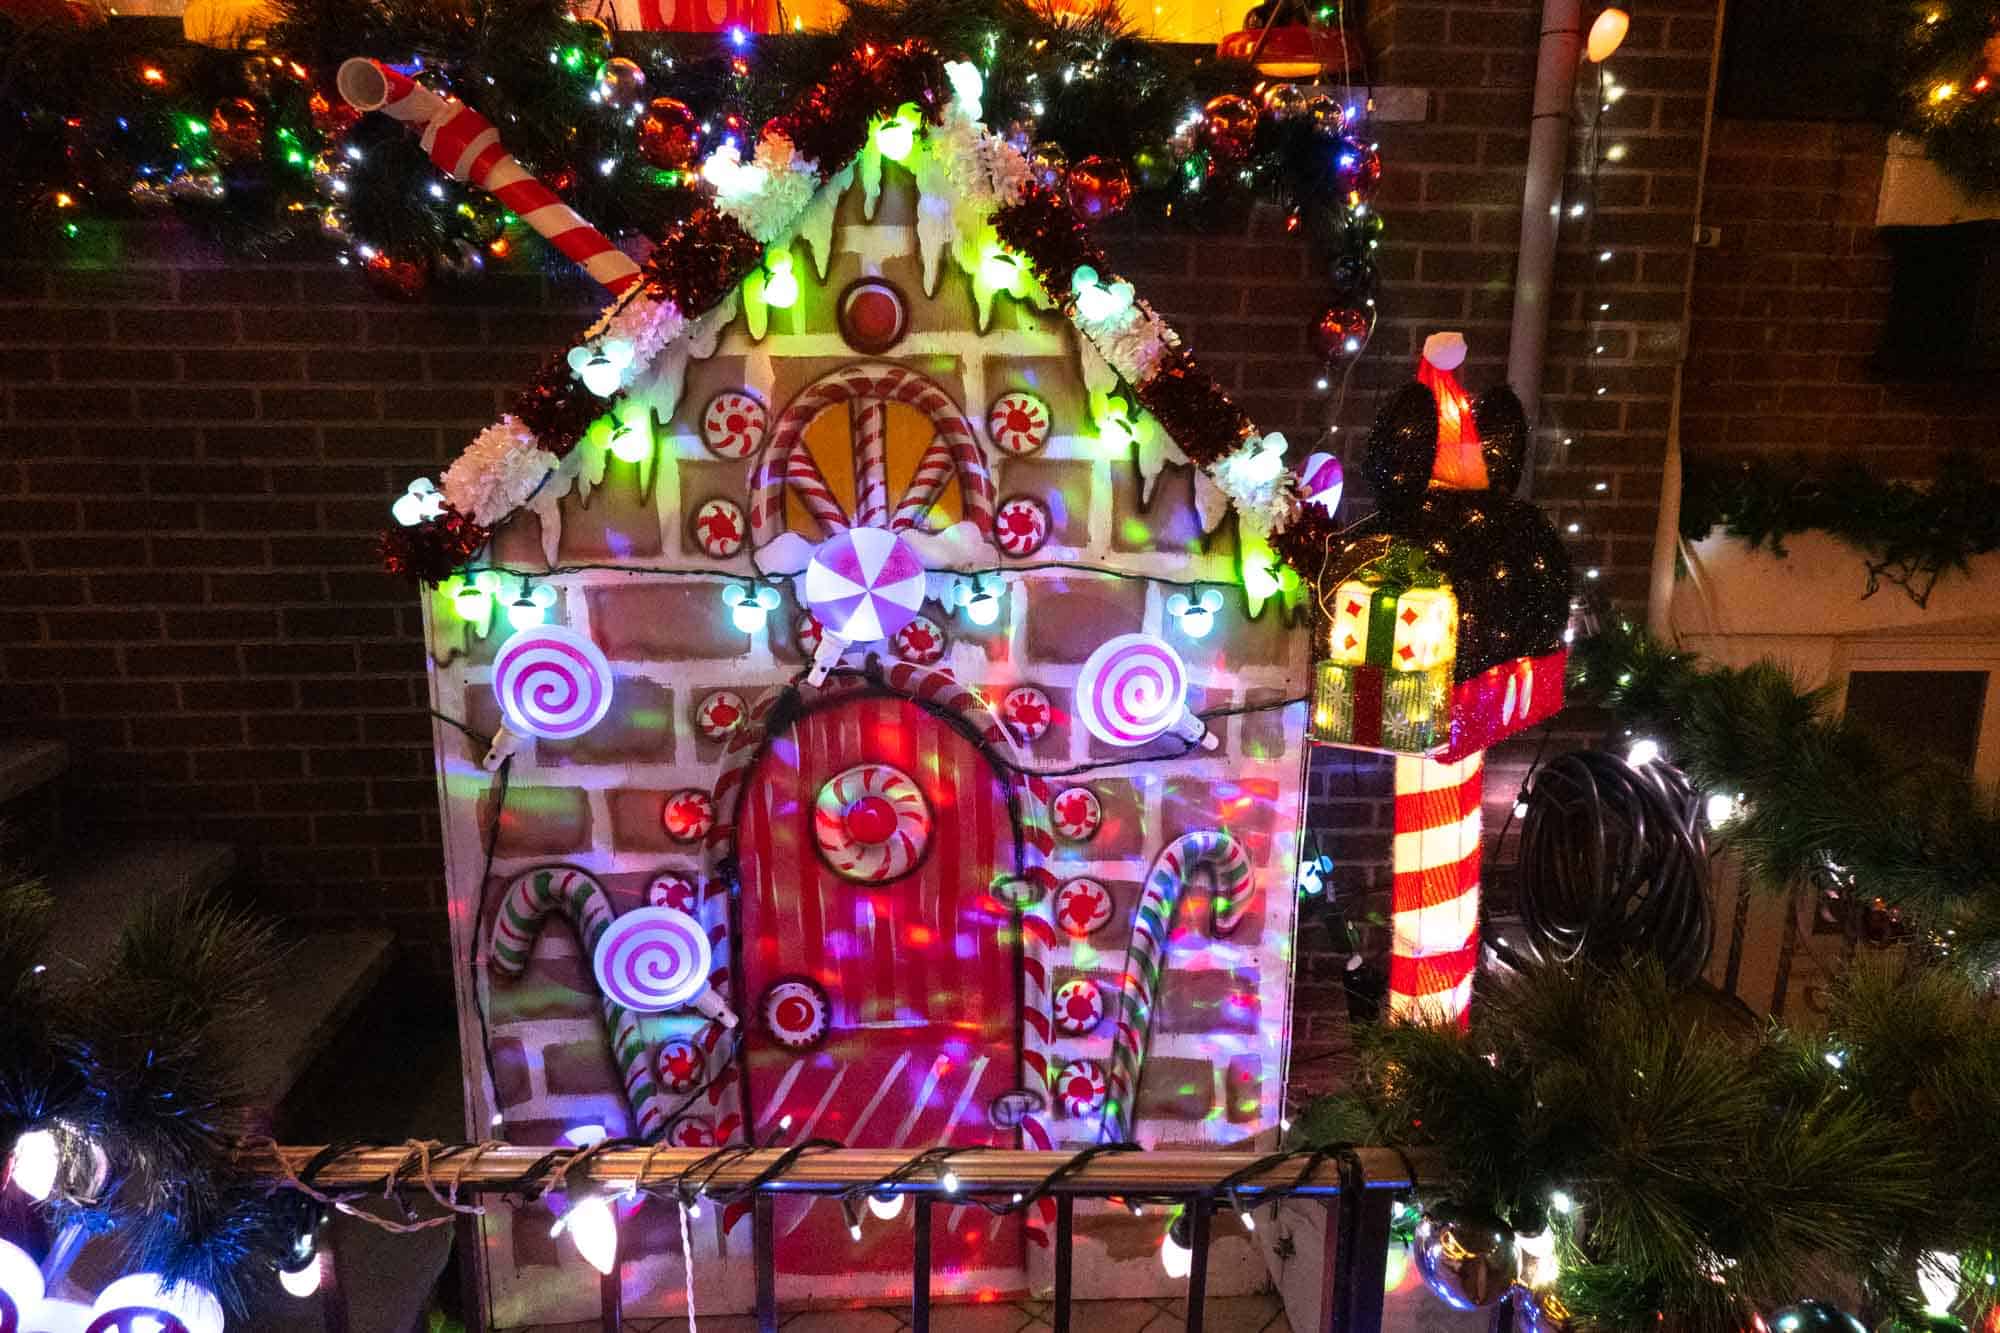 Illuminated gingerbread house Christmas display.